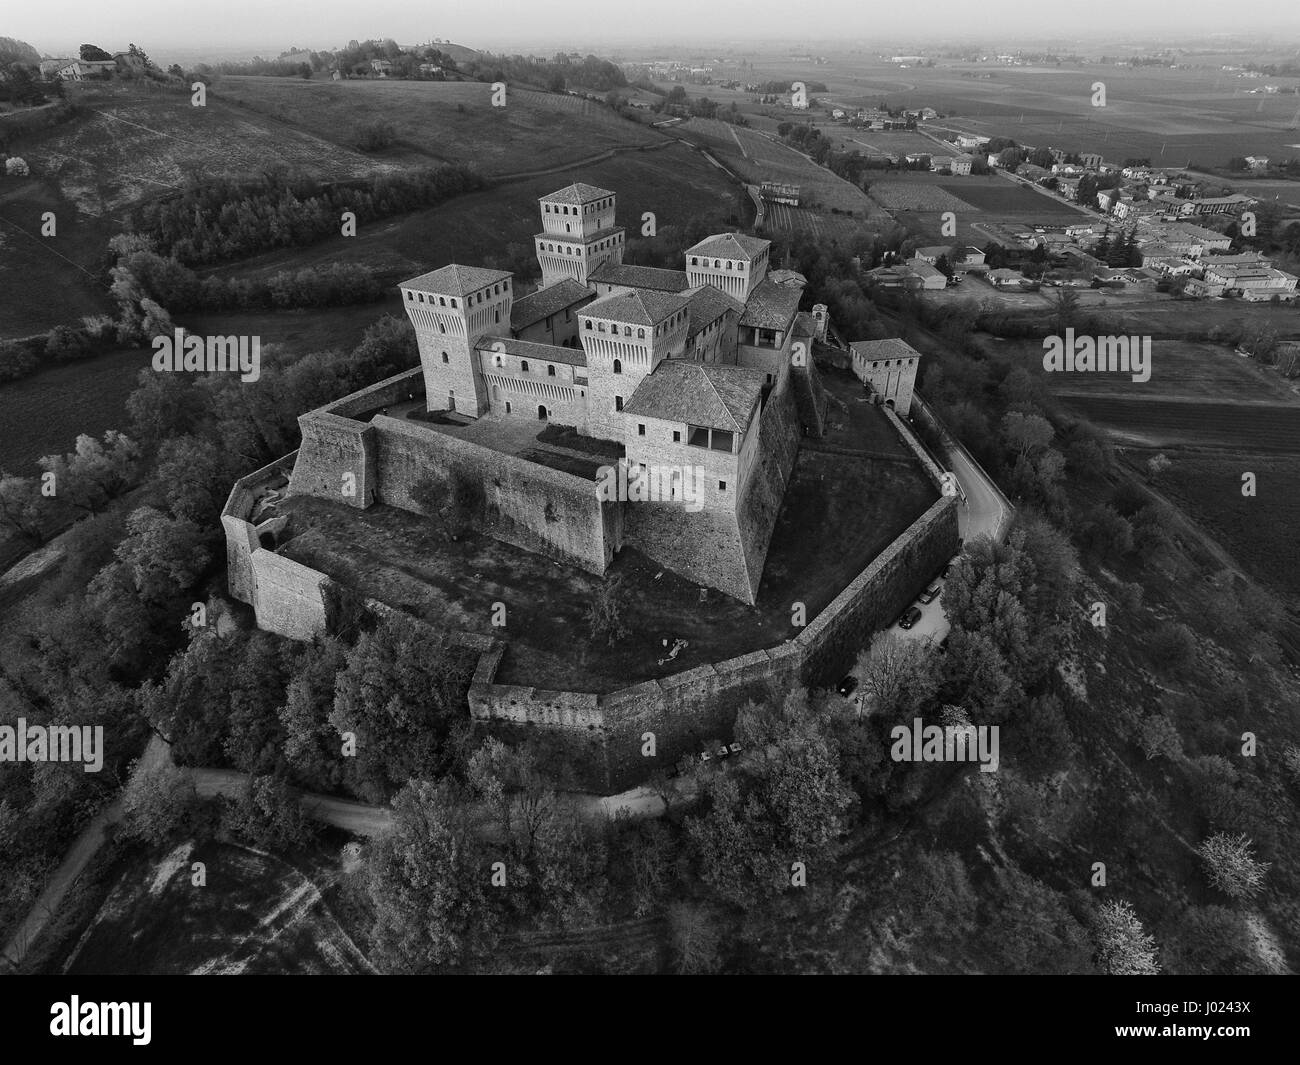 TORRECHIARA CASTLE (aerial view). Langhirano, Emilia Romagna, Italy Stock Photo